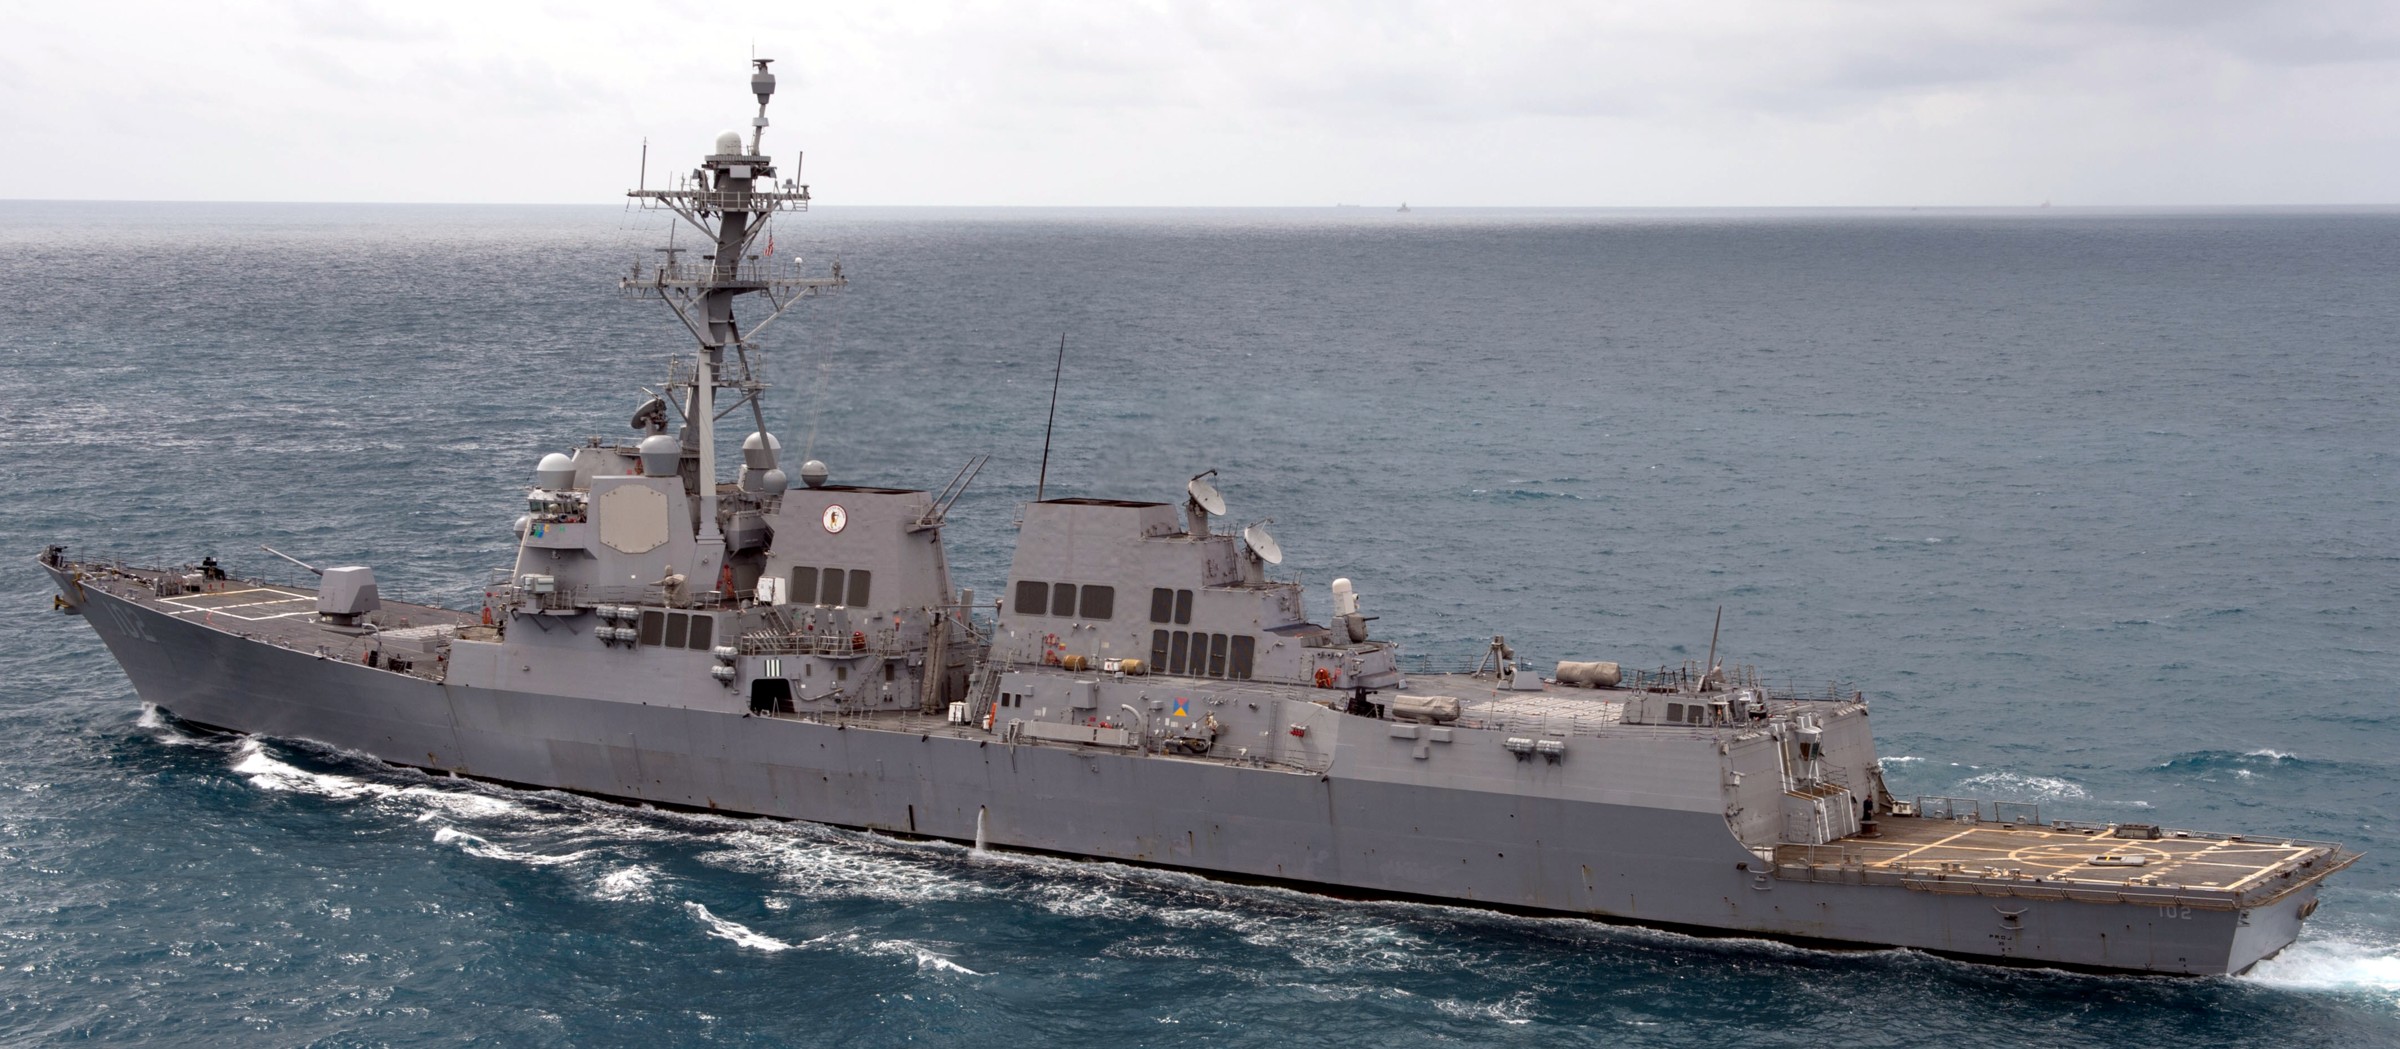 ddg-102 uss sampson arleigh burke class guided missile destroyer aegis us navy java sea 59